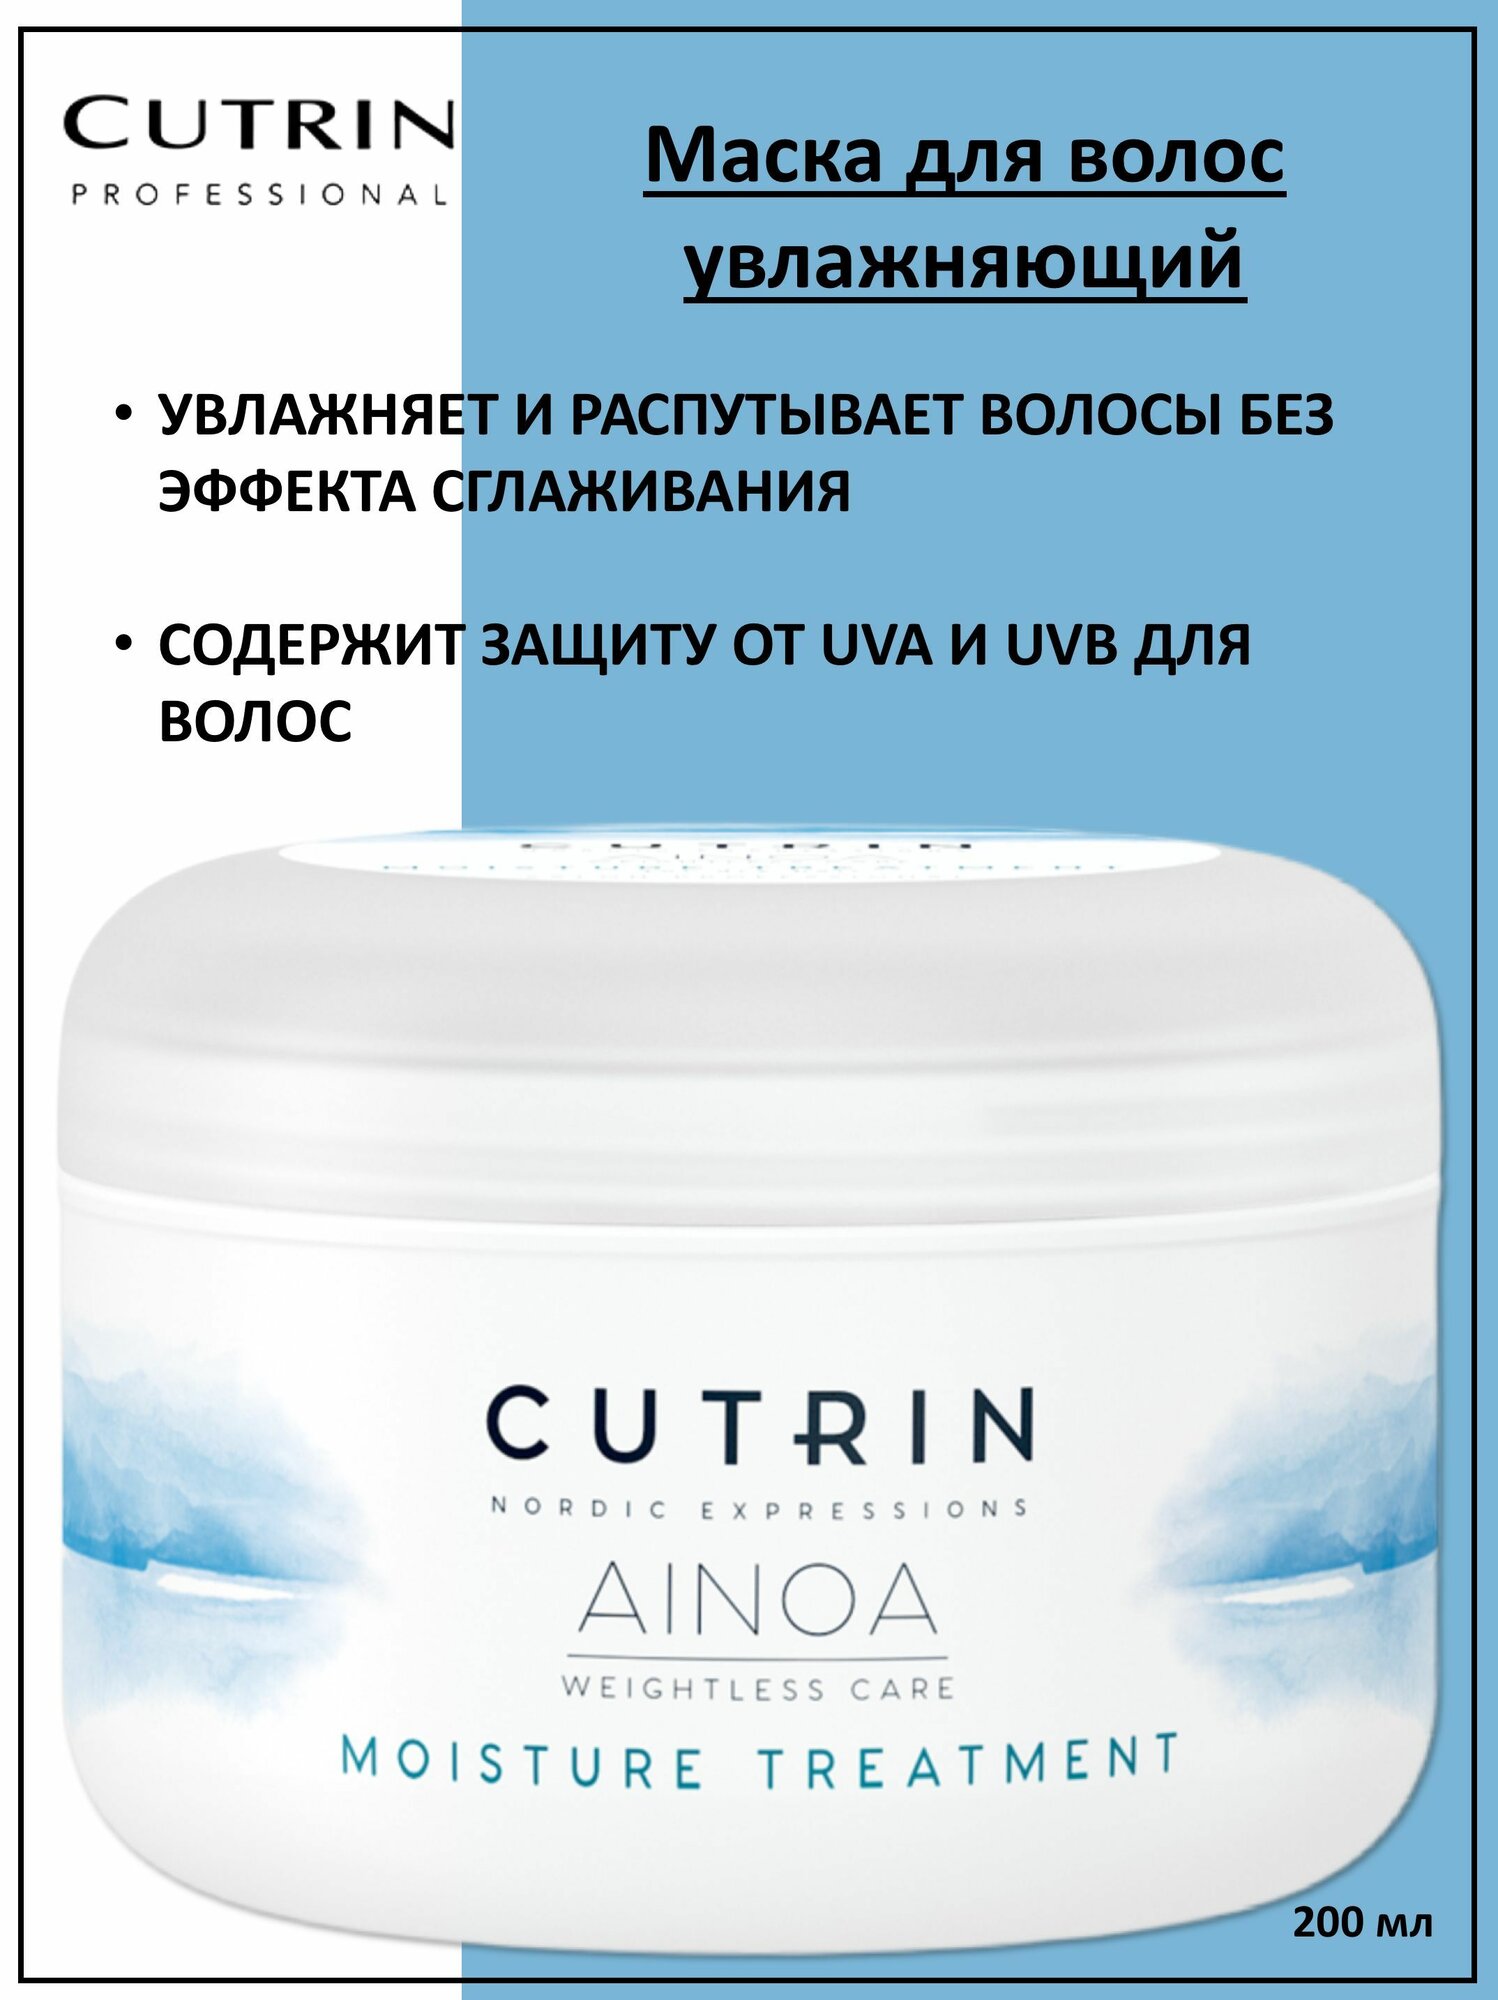 Cutrin Аinoa Moisture Маска для увлажнения волос 200мл